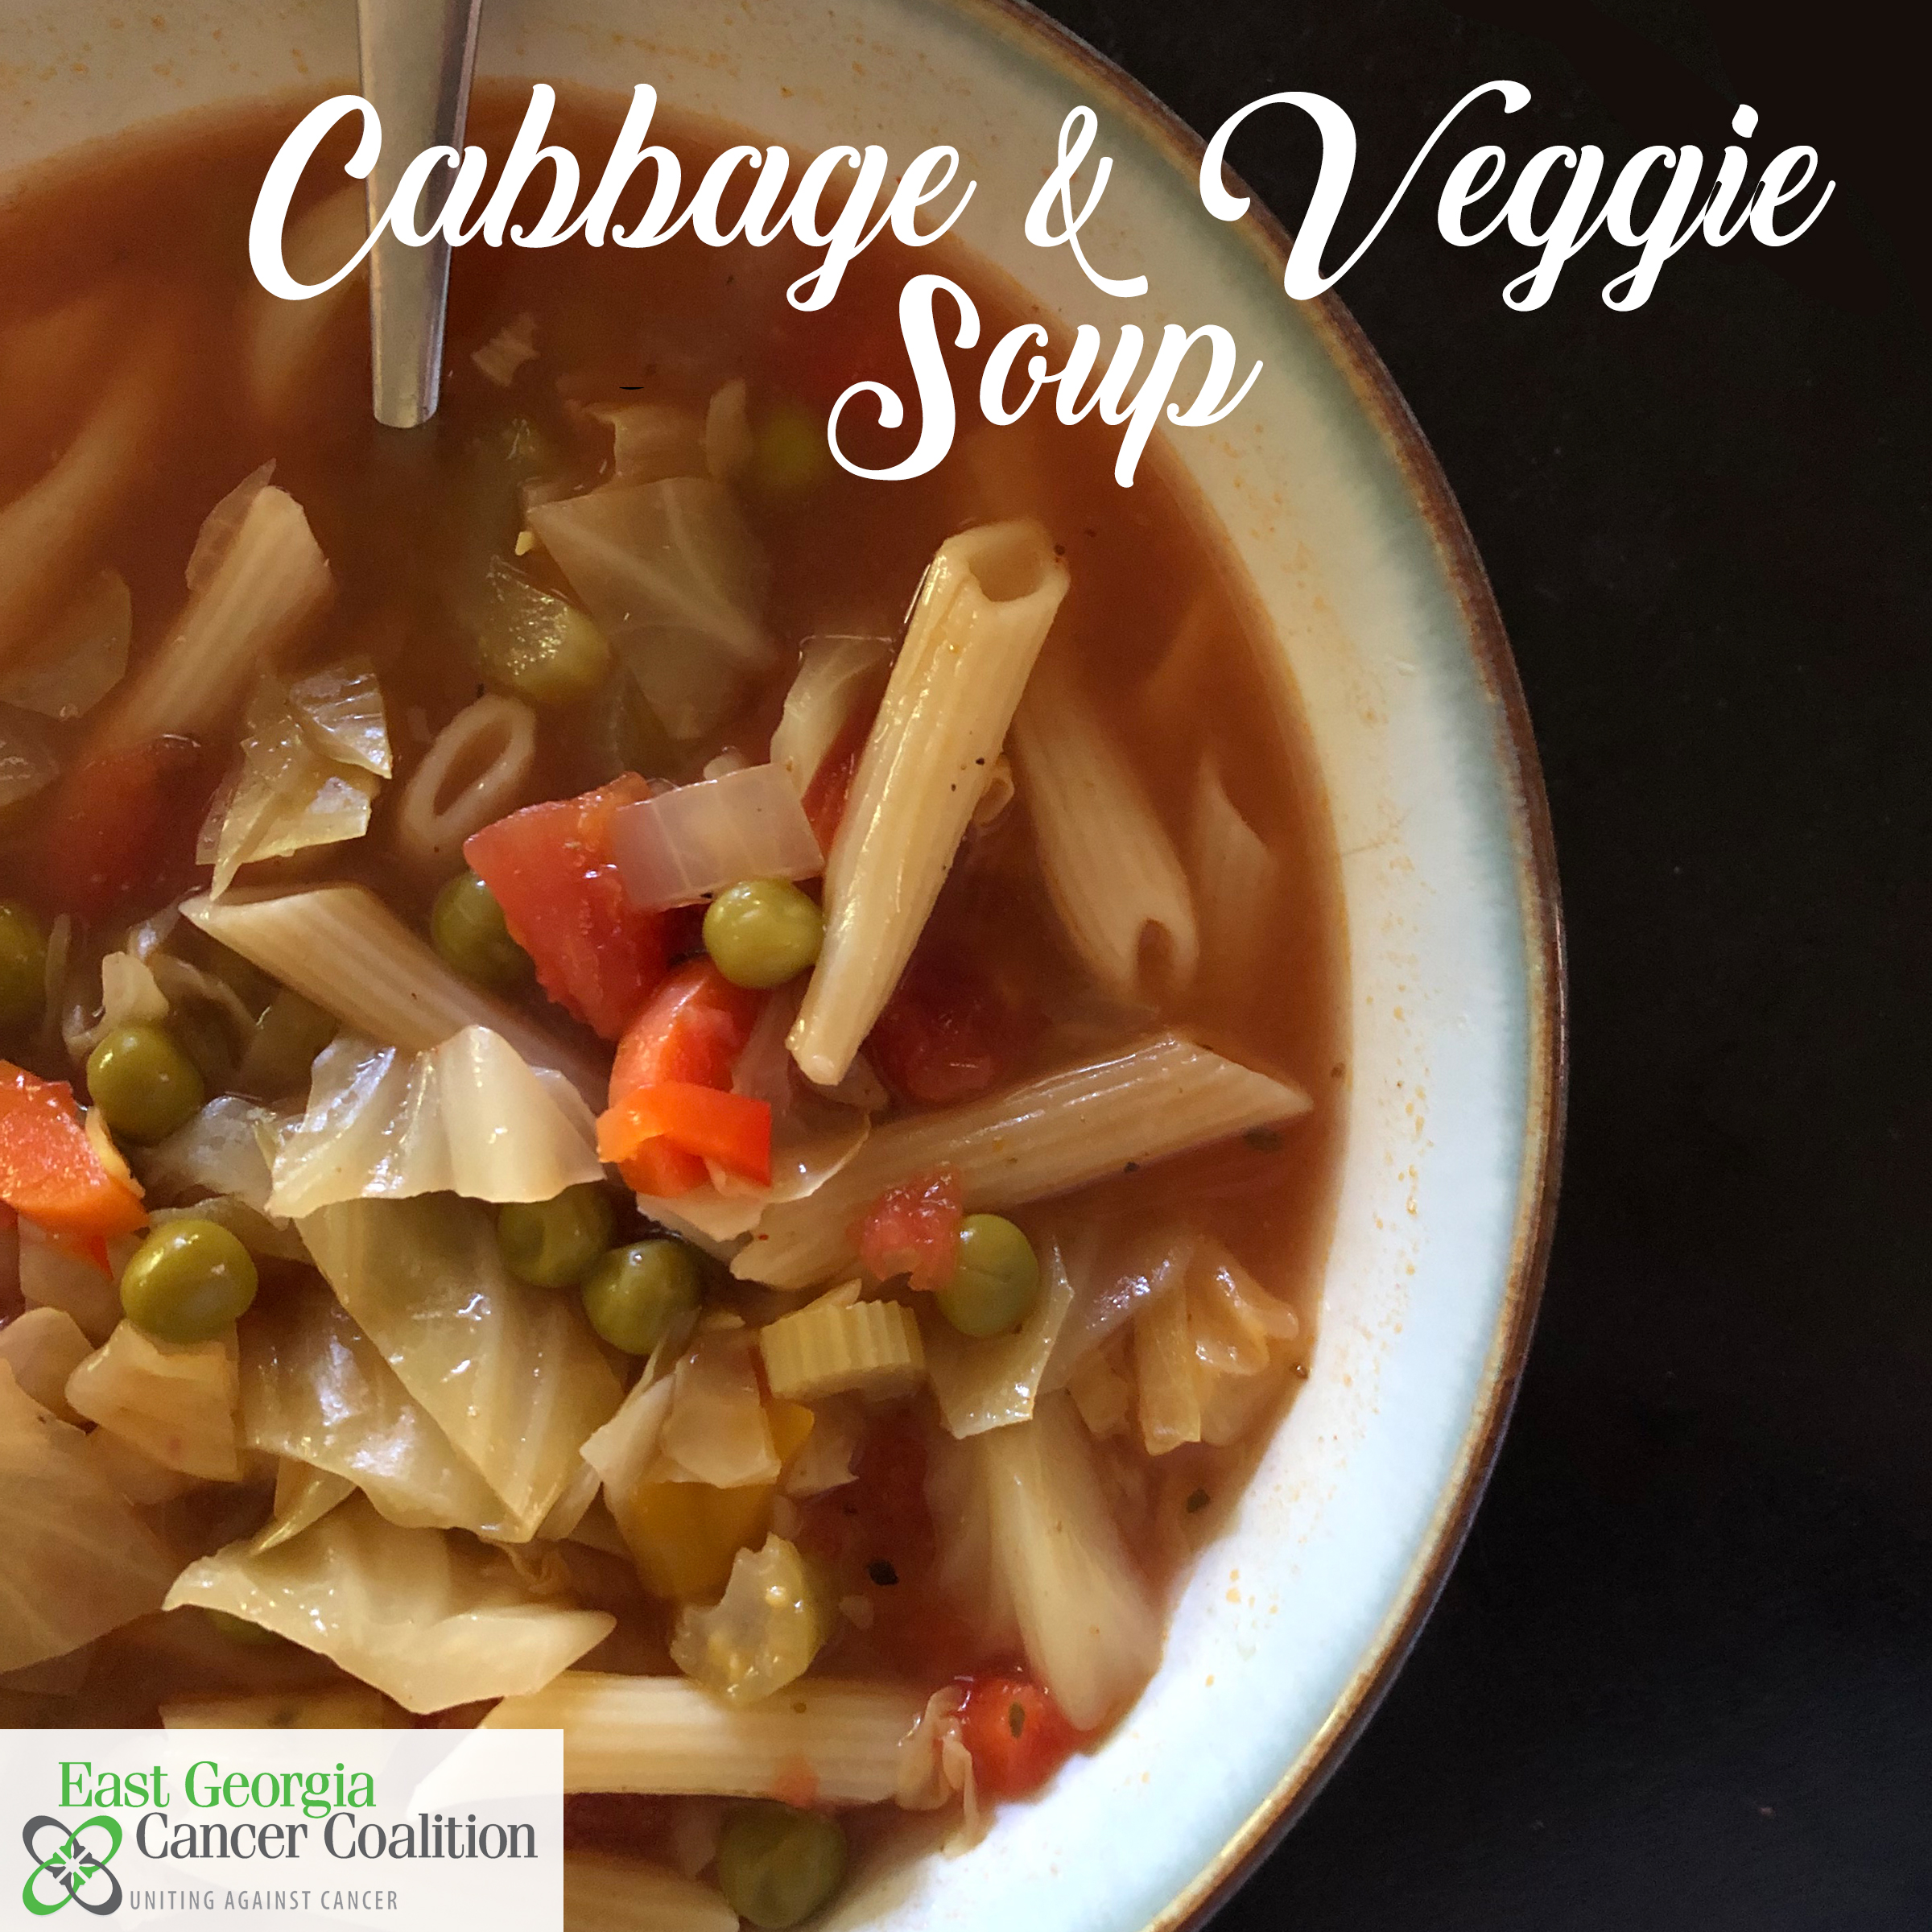 Cabbage & Veggie Soup